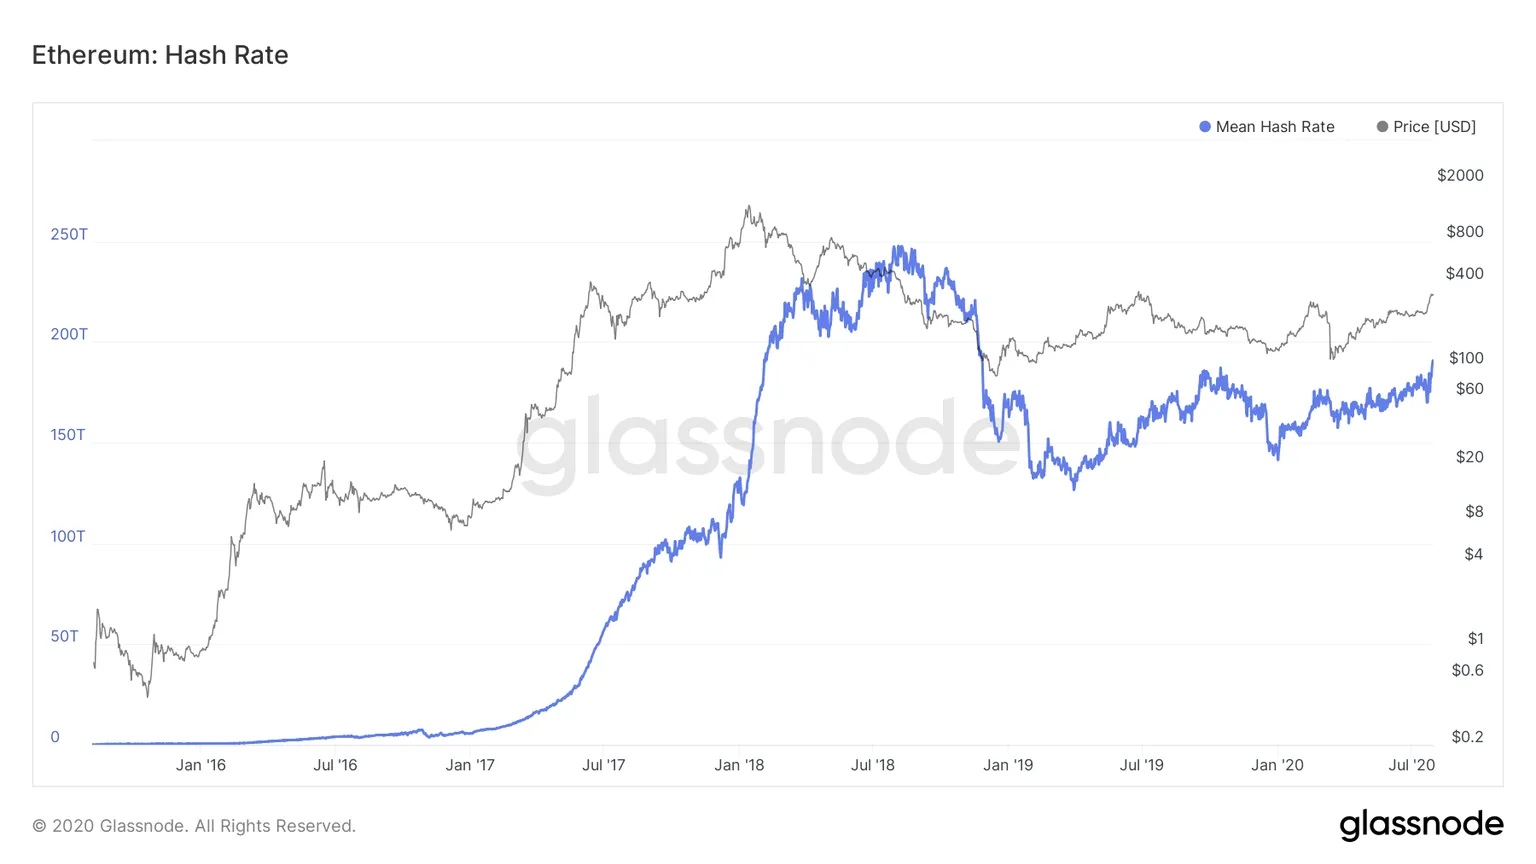 Ethereum hash rate. Source: Glassnode